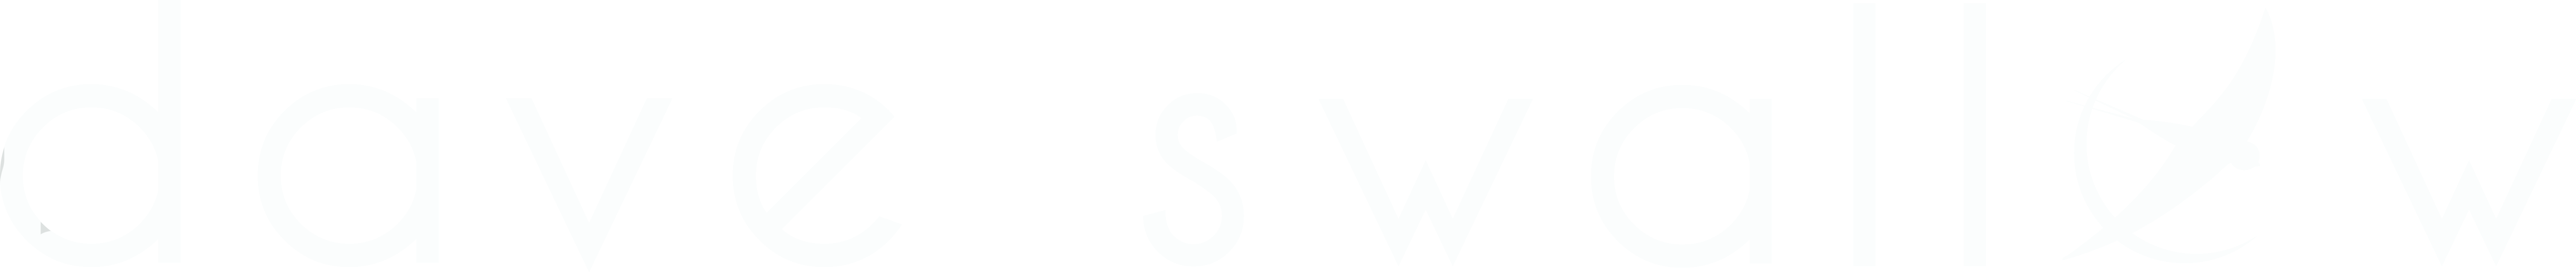 Logo Invert